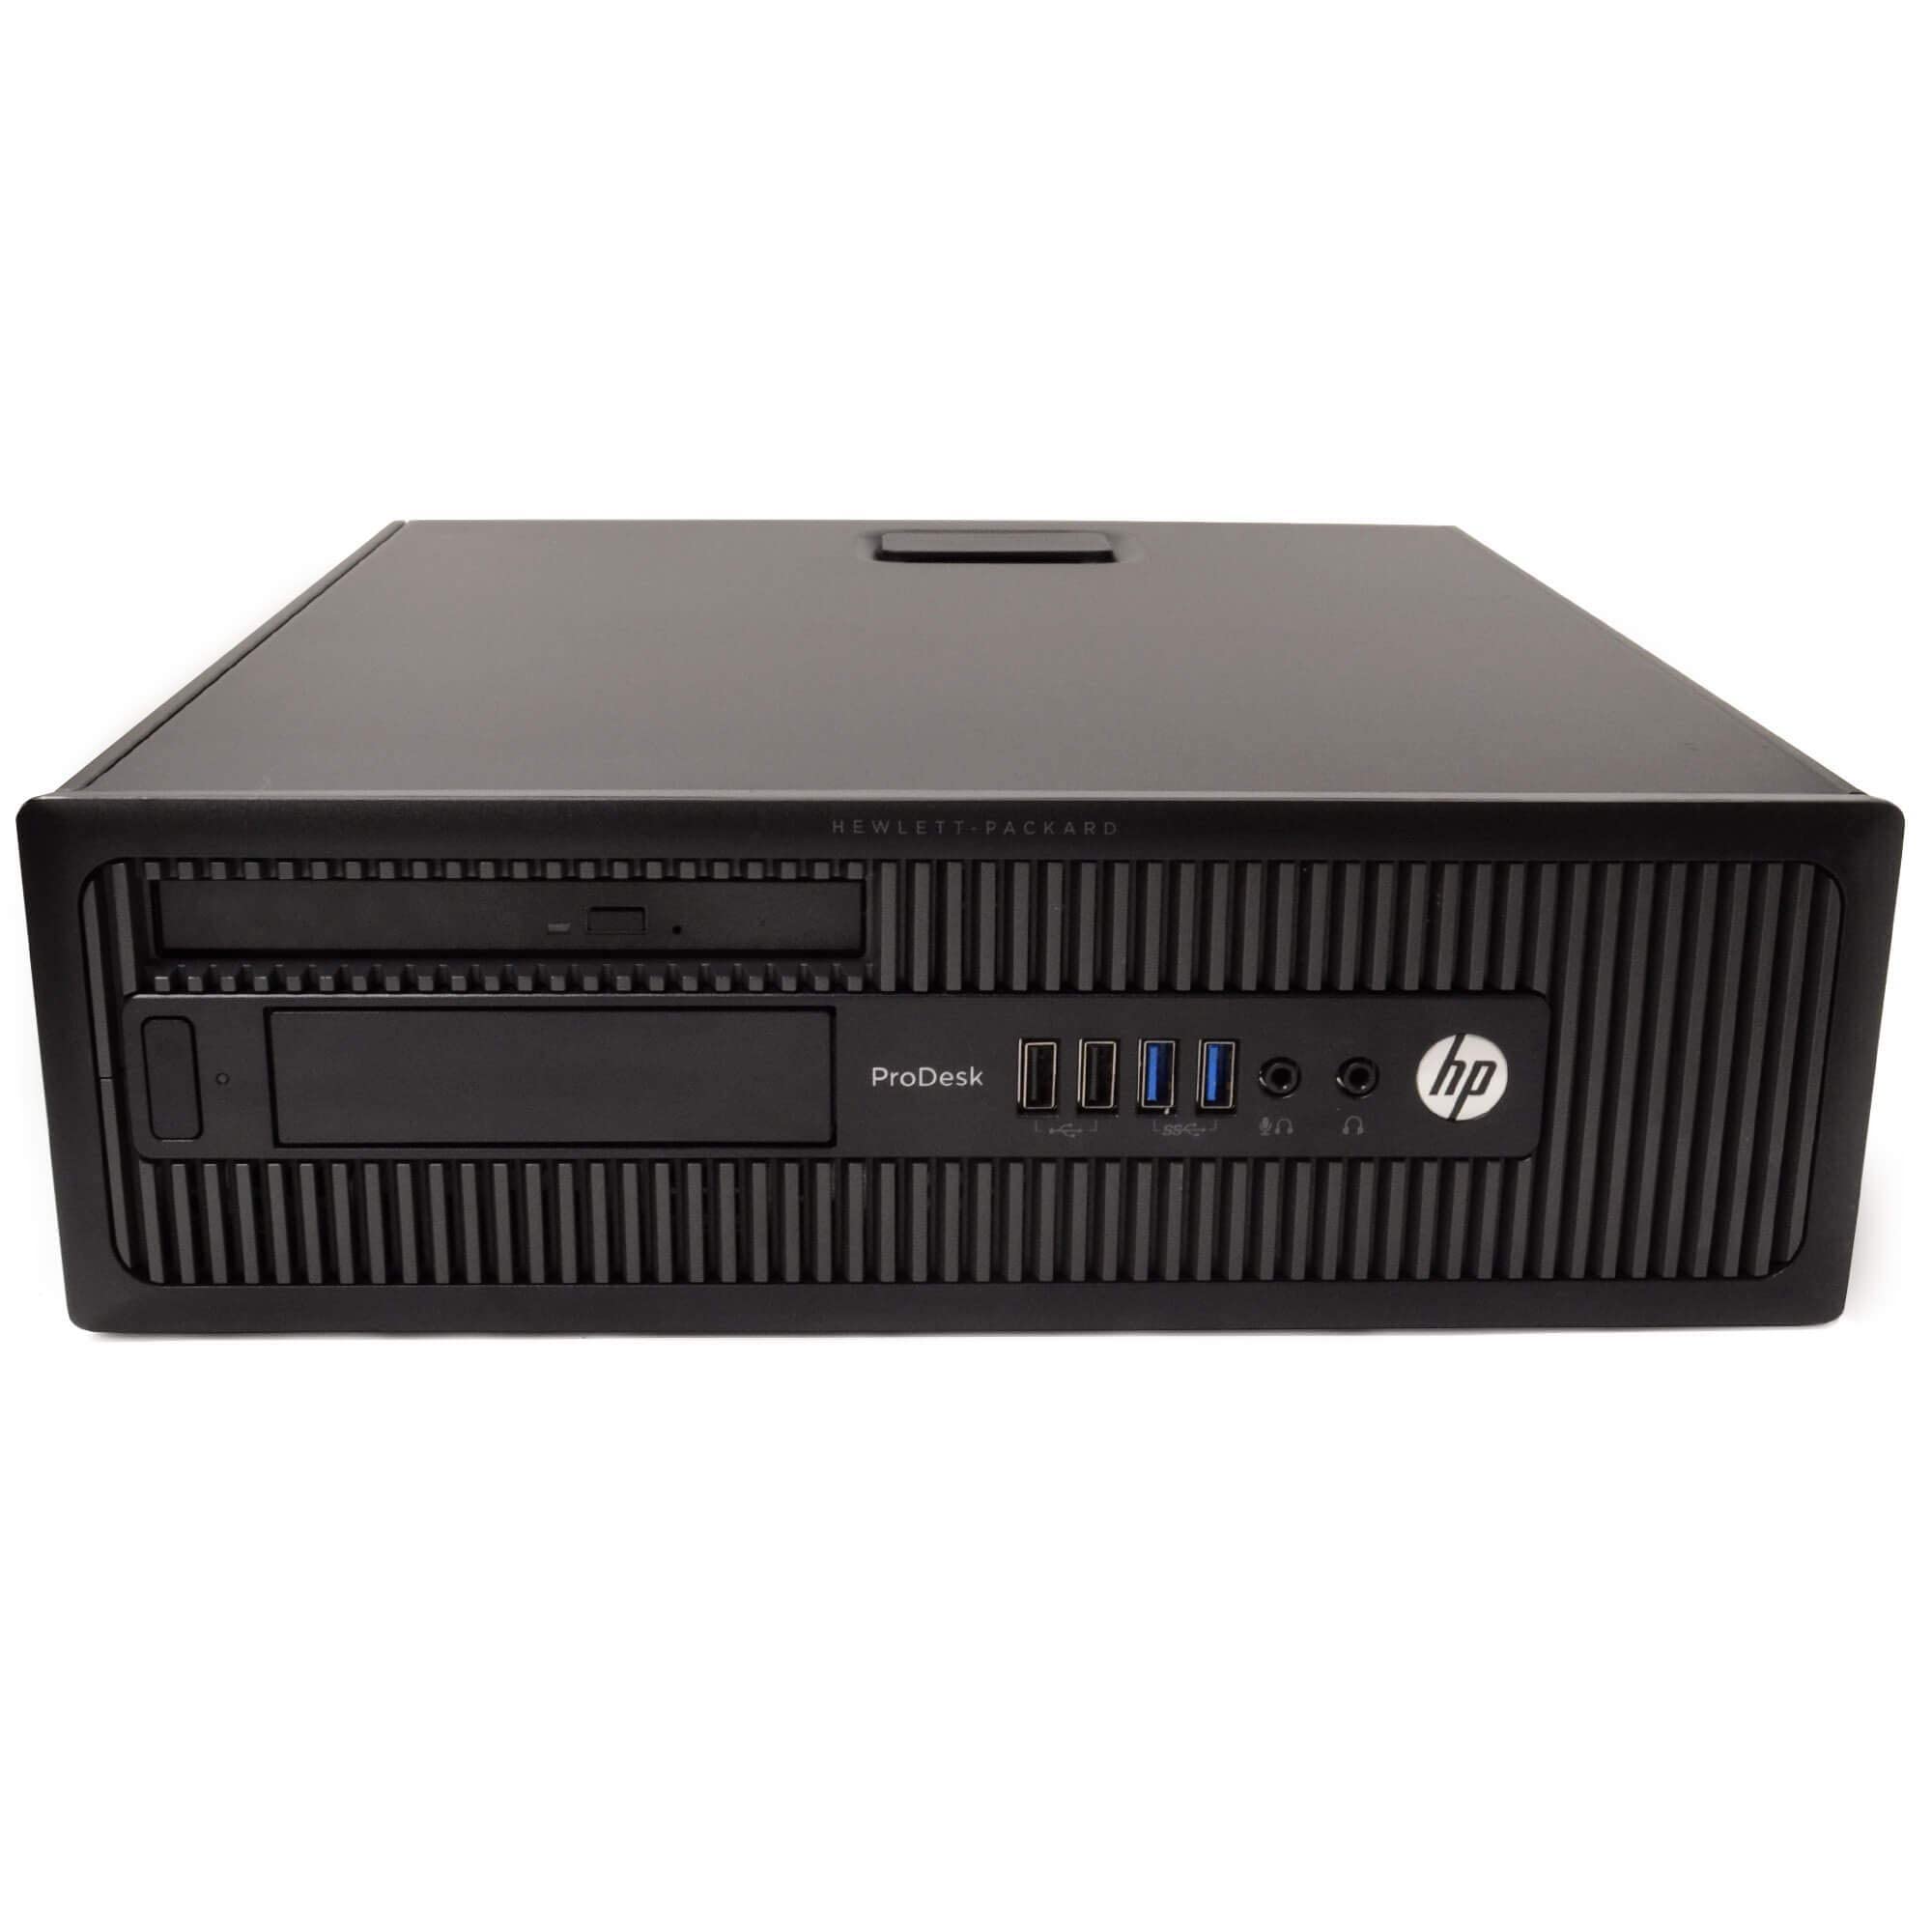 HP ProDesk 600 G1 SFF Slim Business Desktop Computer, Intel i5-4570 up to 3.60 GHz, DVD, USB 3.0, Windows 10 Pro 64 Bit (Renewed) (8GB RAM | 500GB HDD) (Renewed)